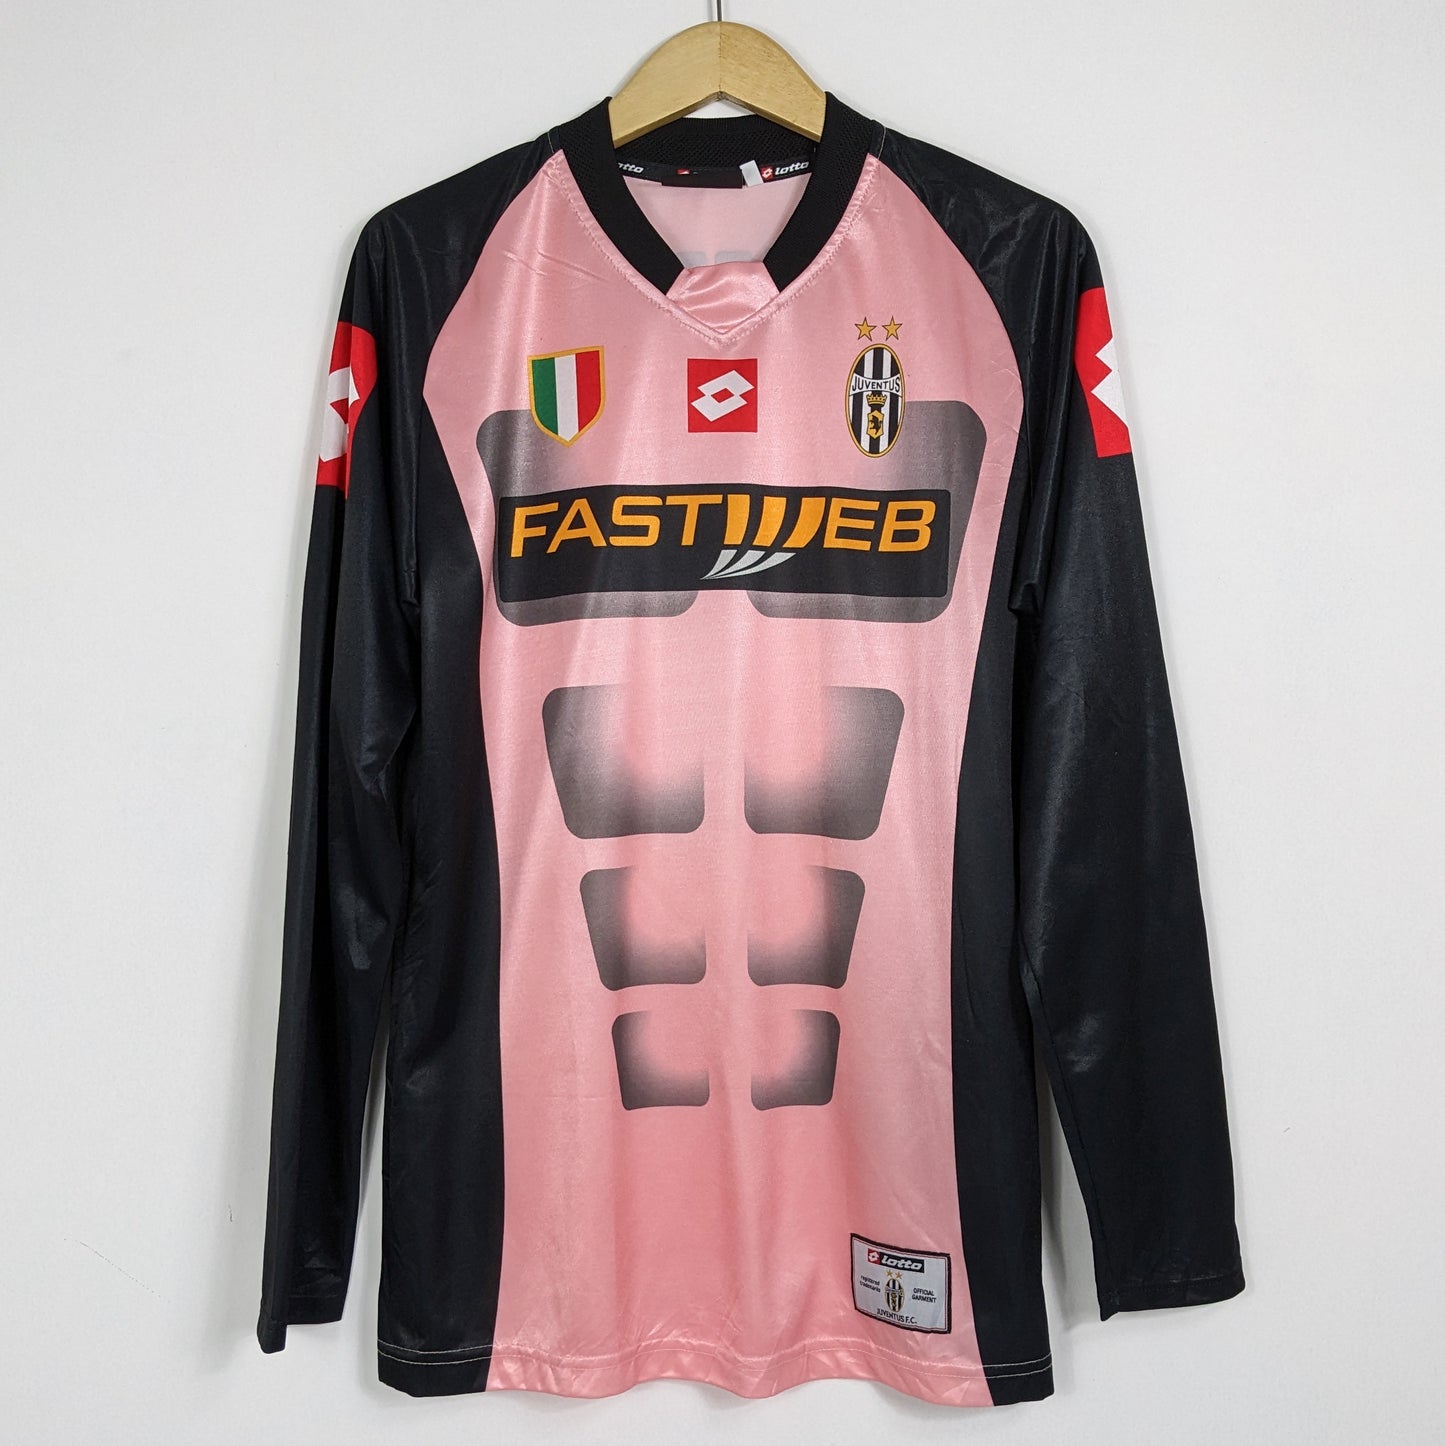 Authentic Juventus 2002/03 GK - Buffon #1 Size L